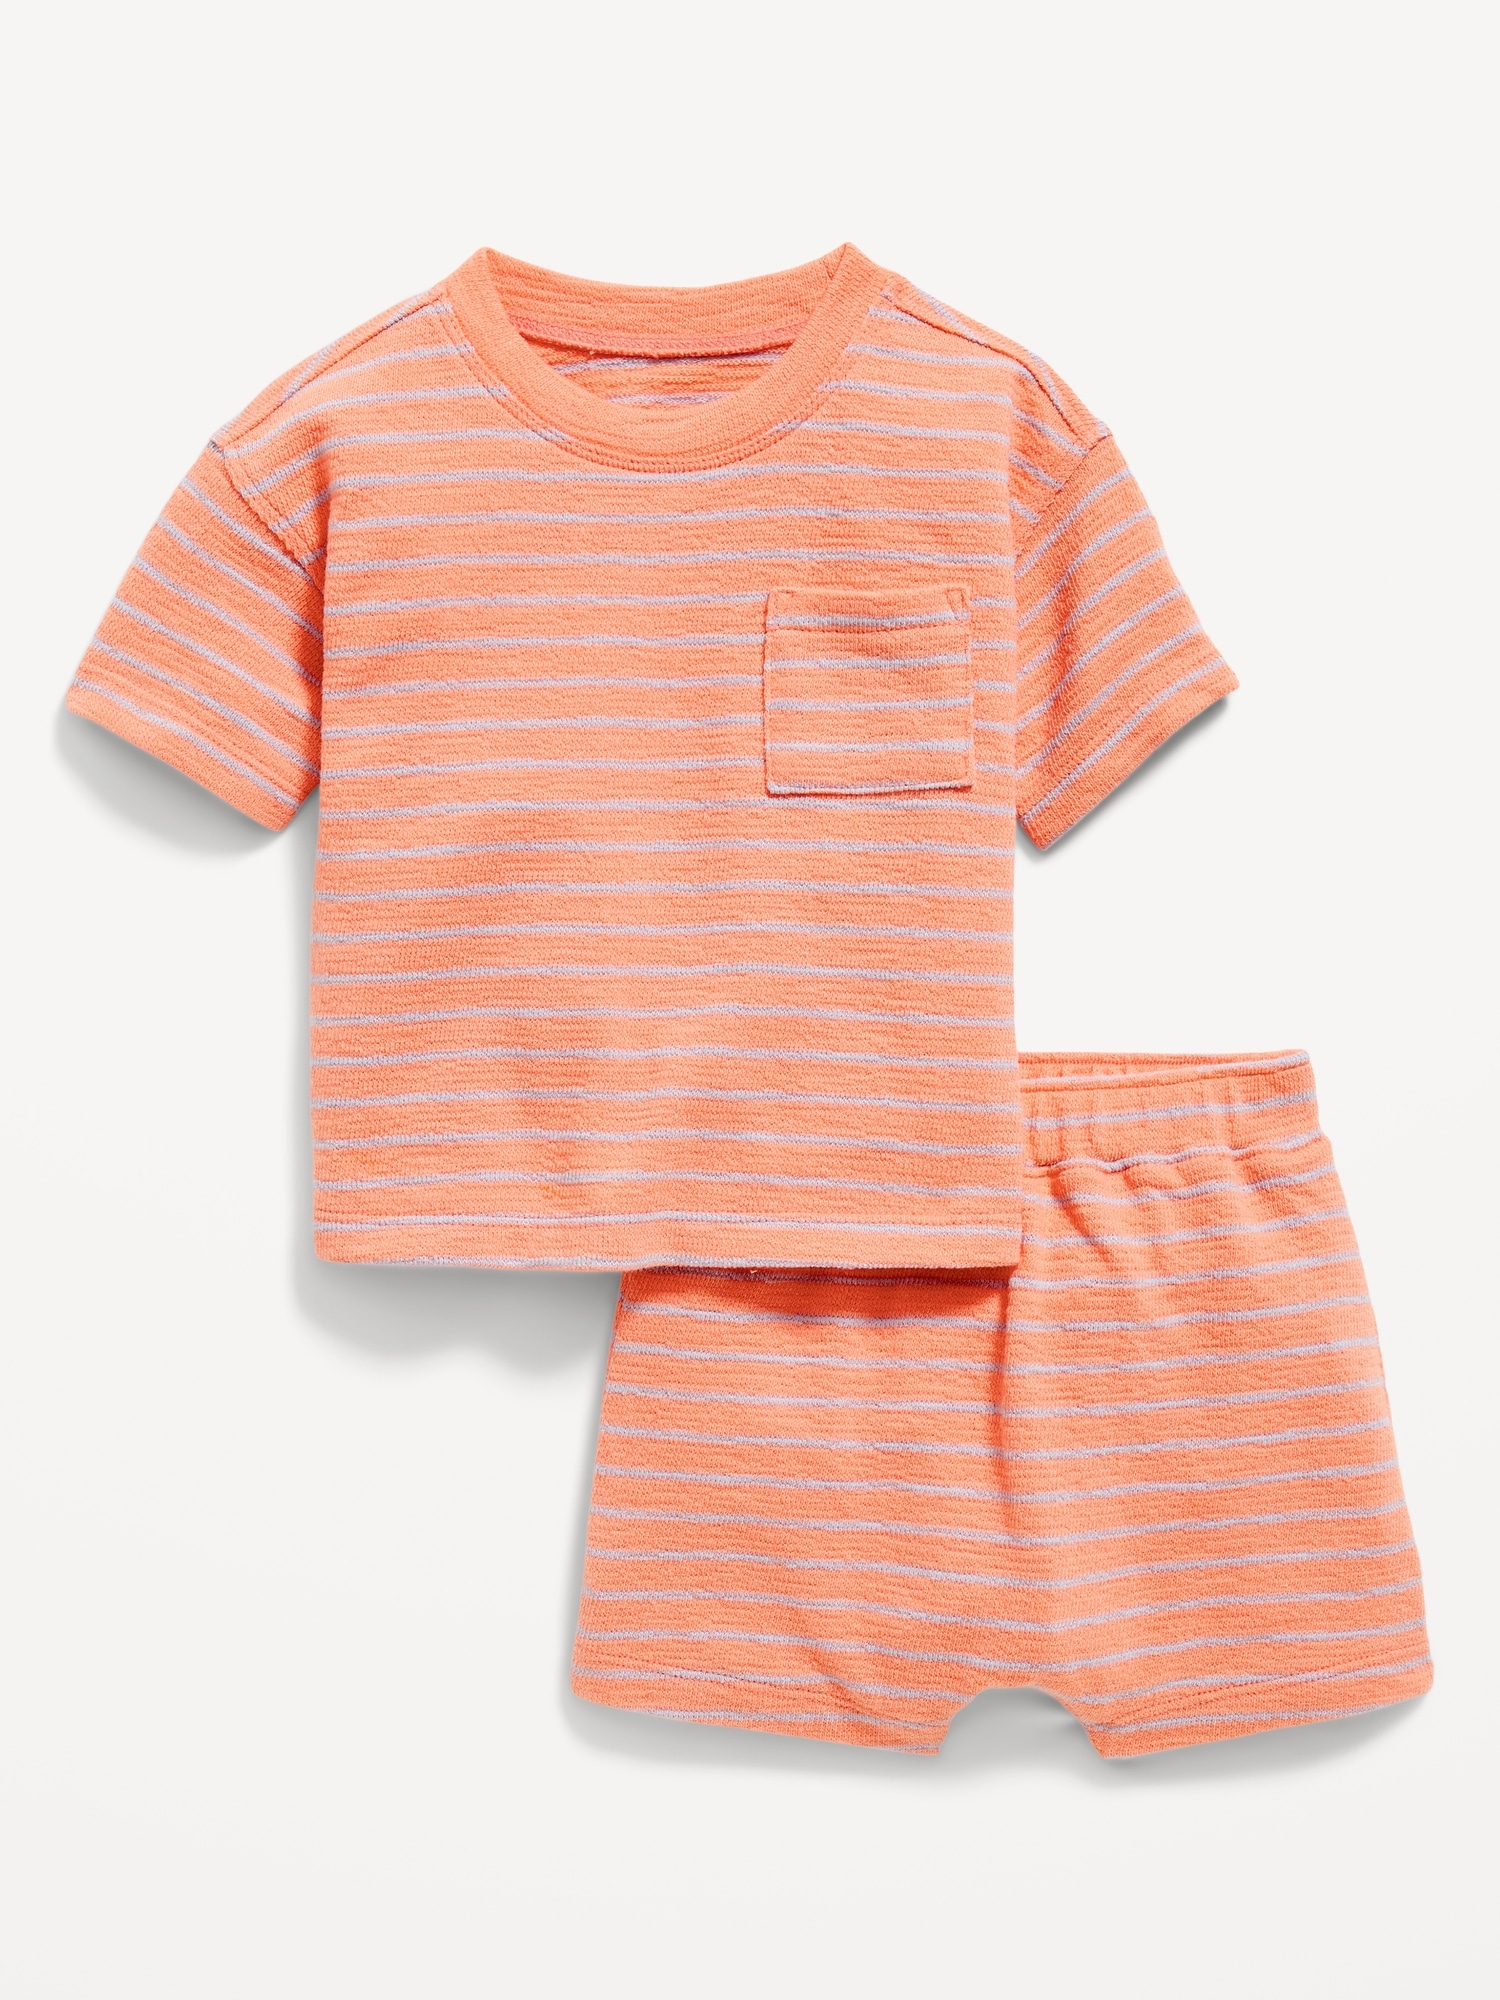 Short-Sleeve Pocket T-Shirt and Shorts Set for Baby